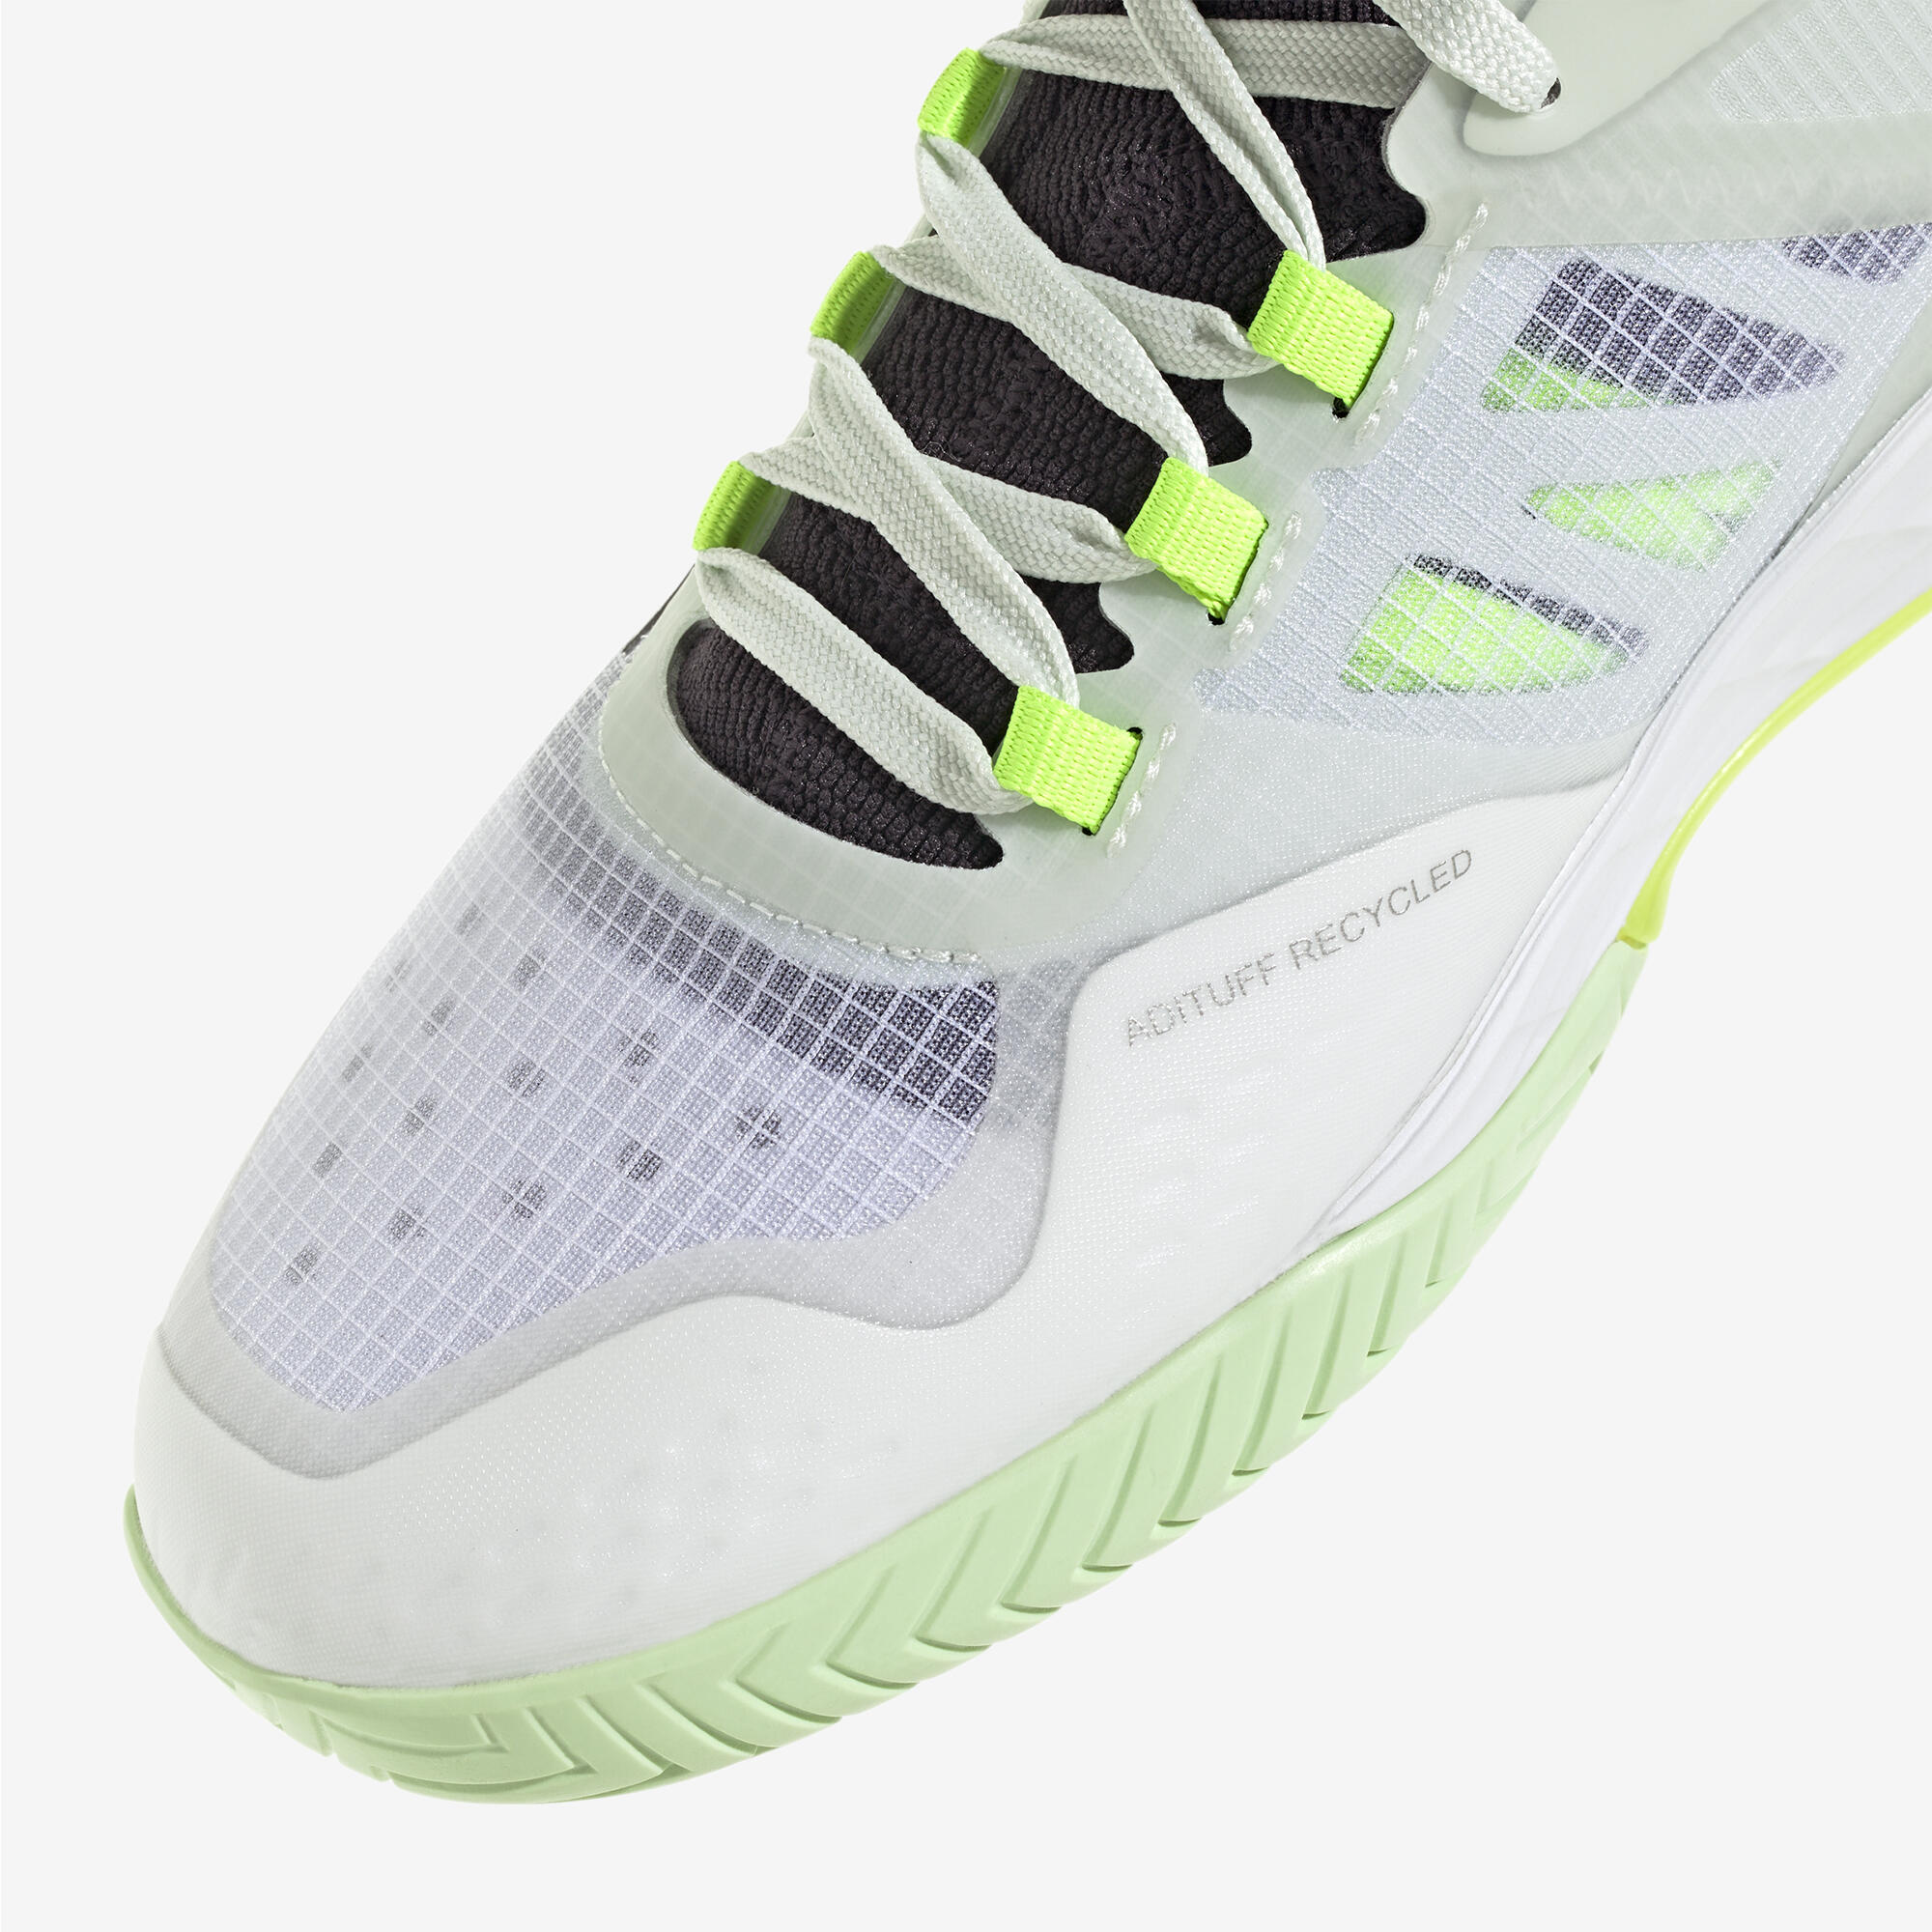 Men's Tennis Multicourt Shoes Adizero Ubersonic 4.1 - Lucid Lemon 5/9